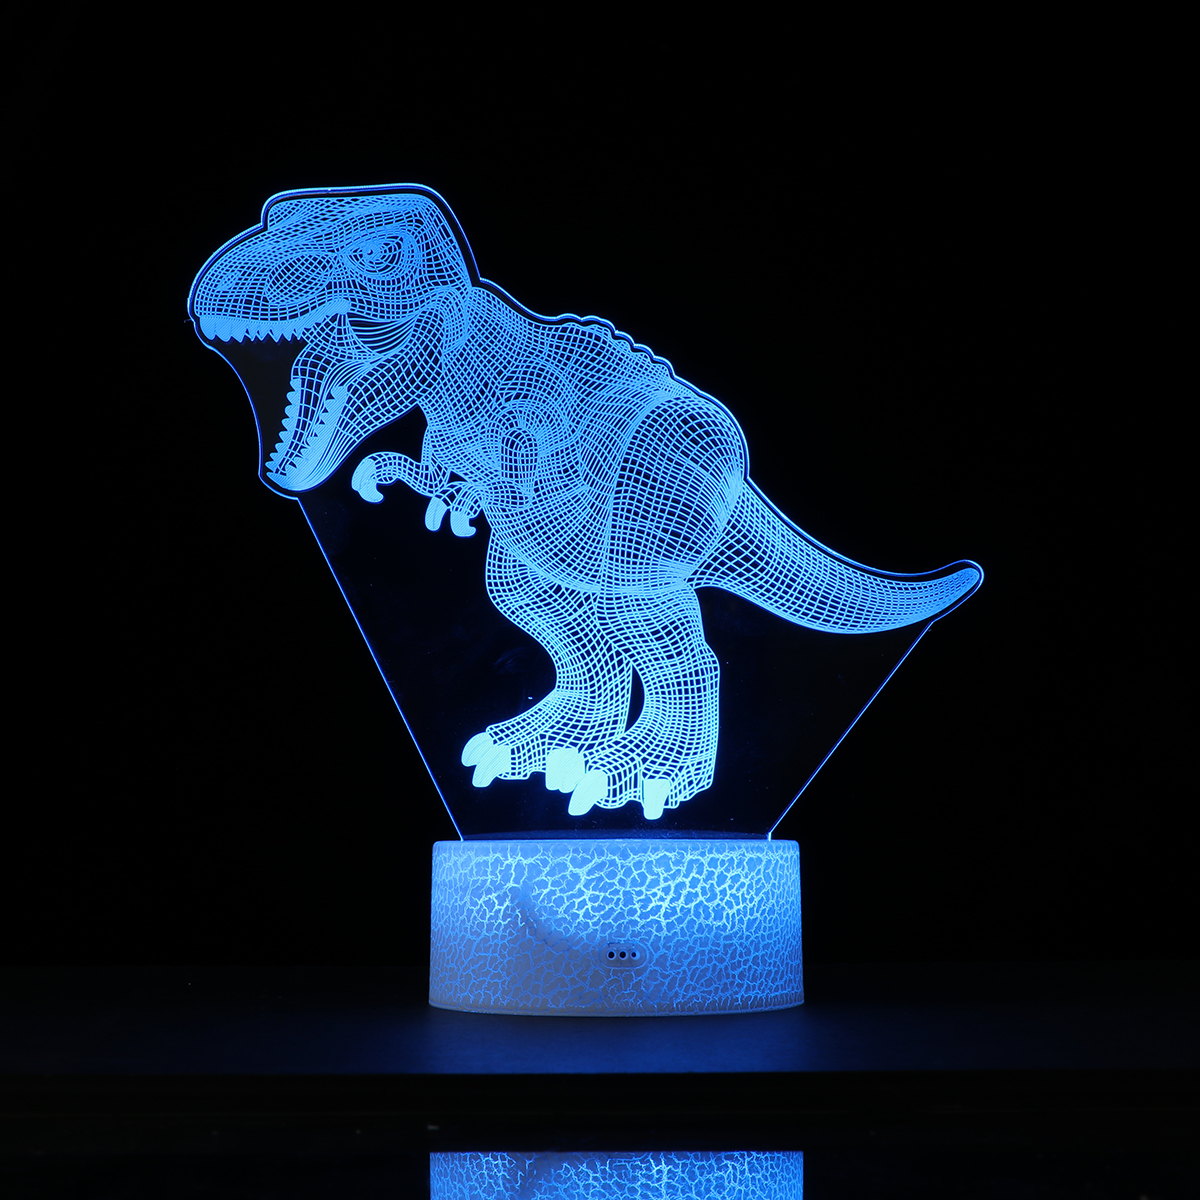 USBBattery-Powered-3D-Children-Kids-Night-Light-Lamp-Dinosaur-Toys-Boys-16-Colors-Changing-LED-Remot-1772096-3